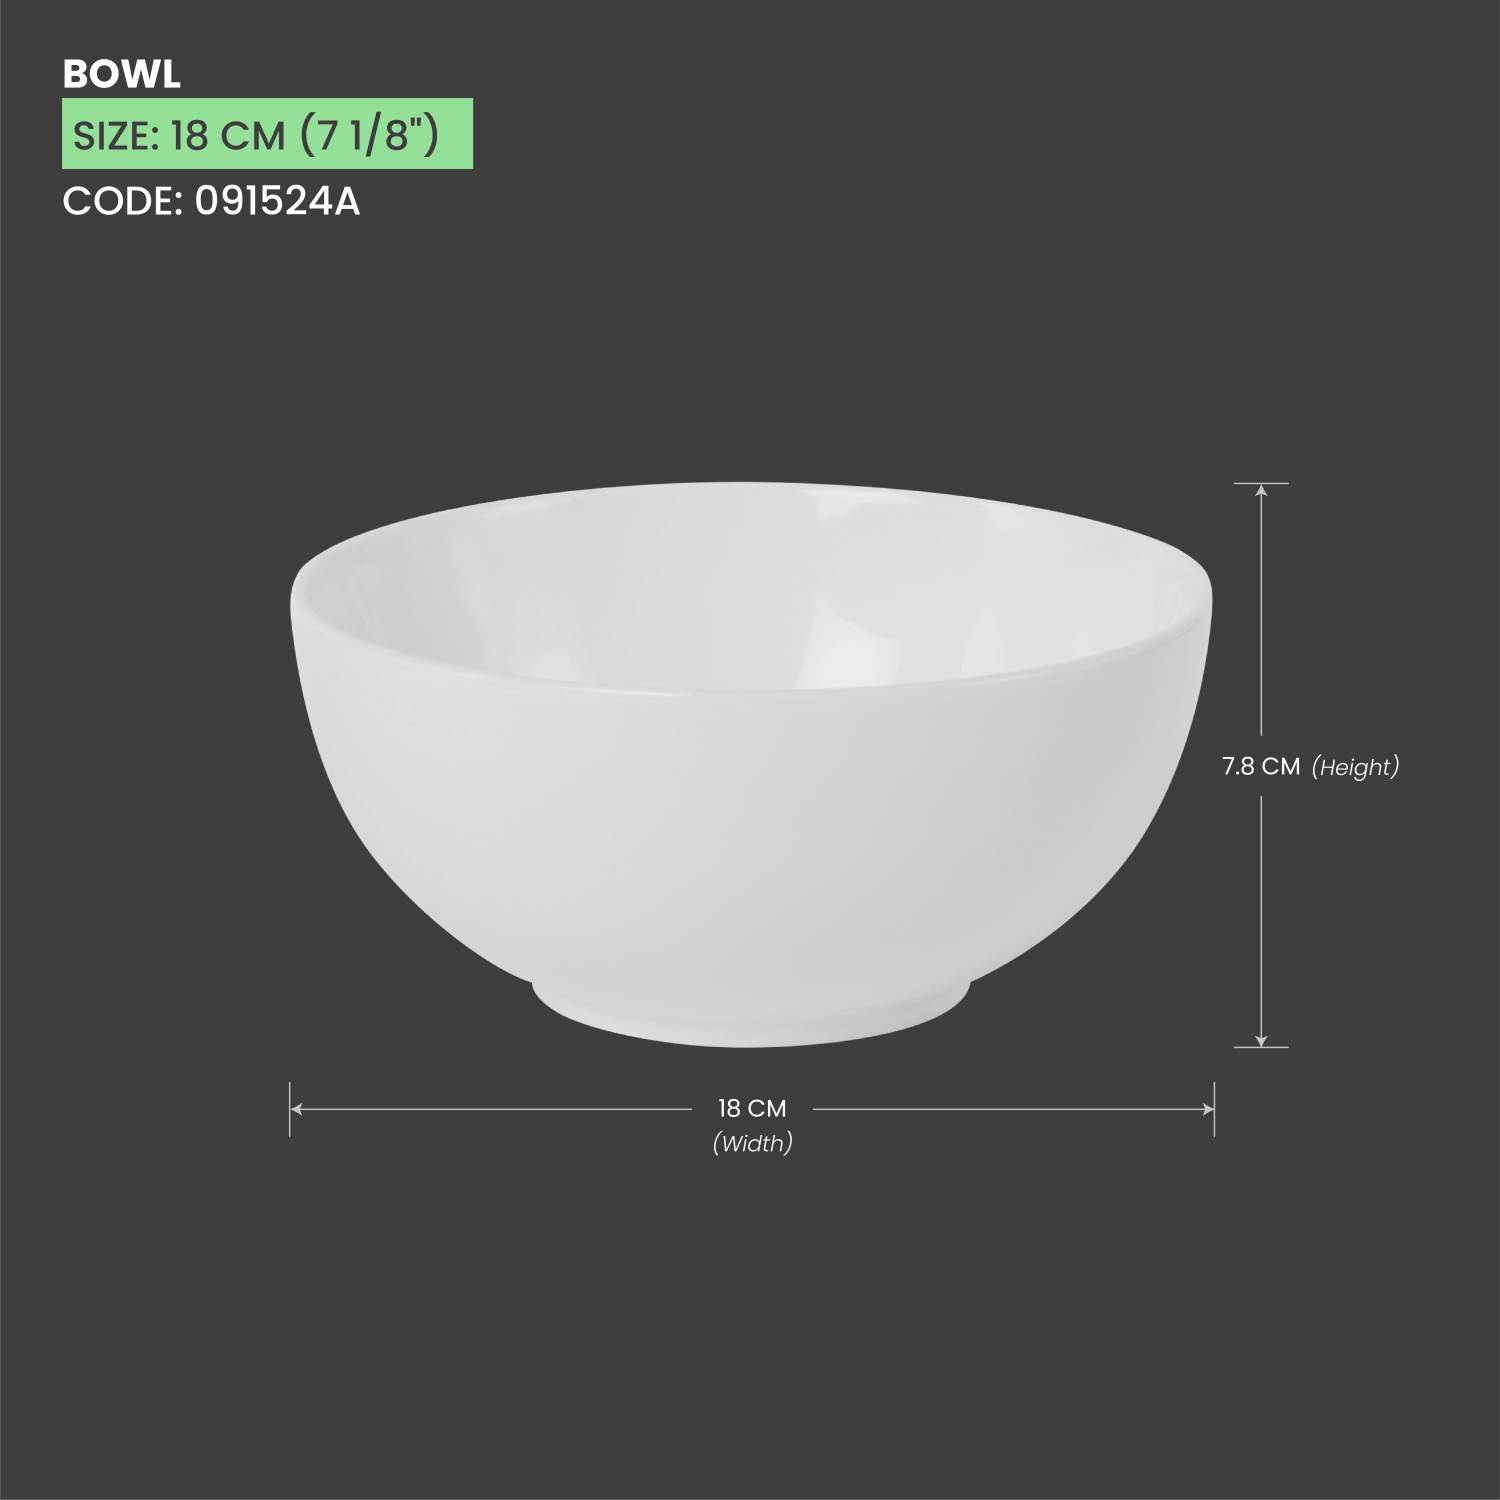 Baralee Simple Plus Bowl 18 Cm (7 1/8")